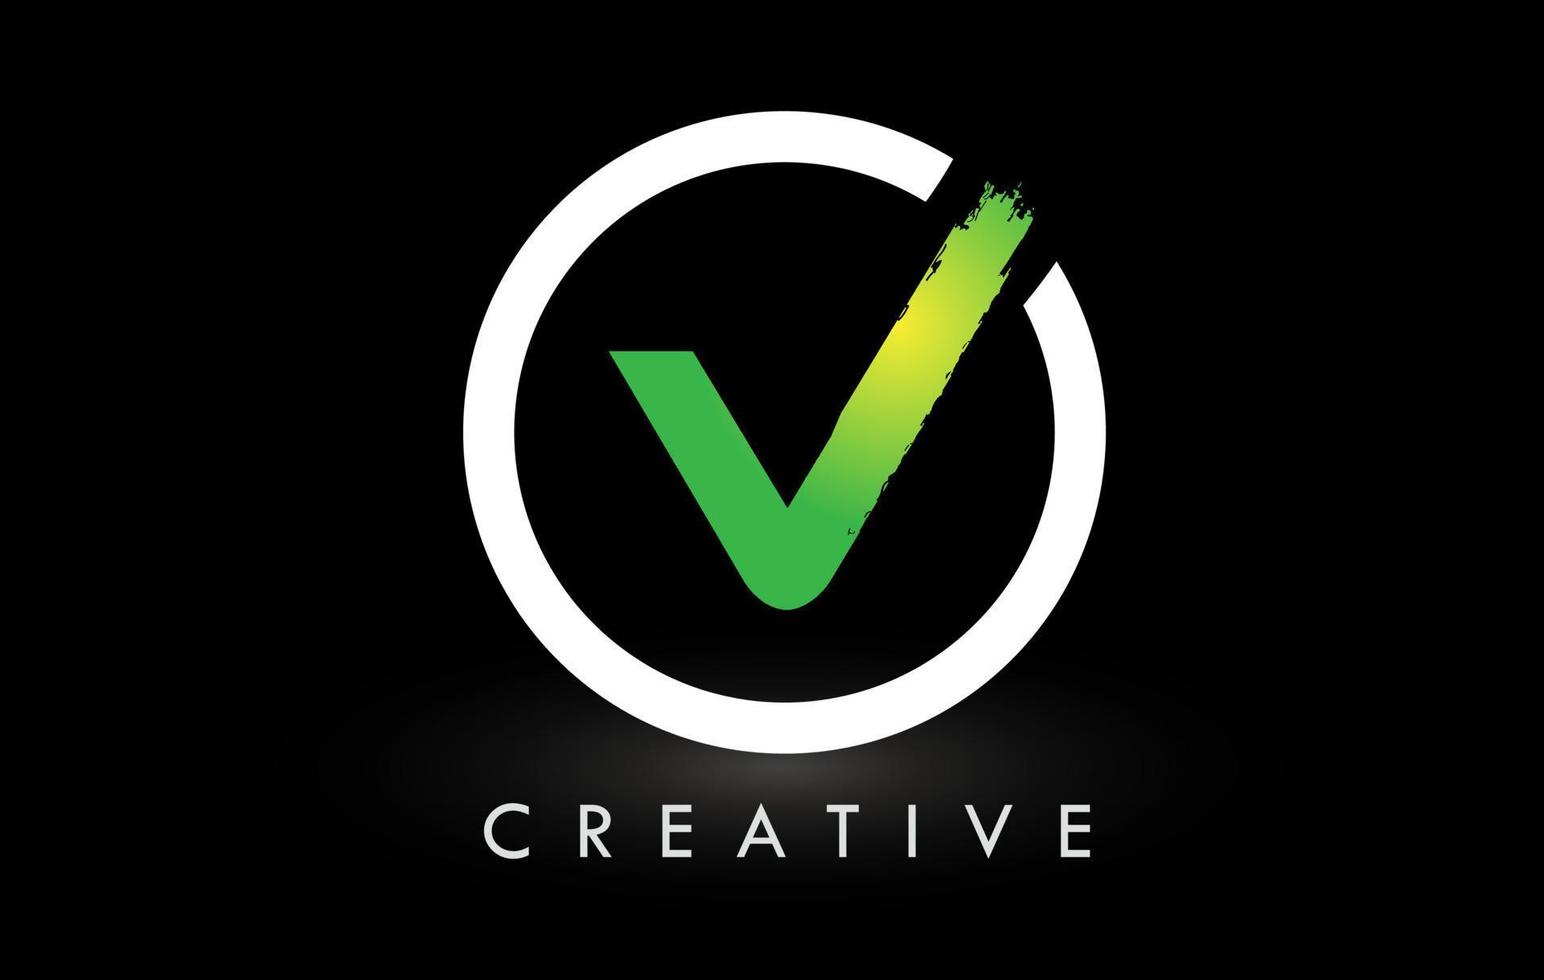 v groen wit borstel letter logo ontwerp. creatieve geborstelde letters pictogram logo. vector